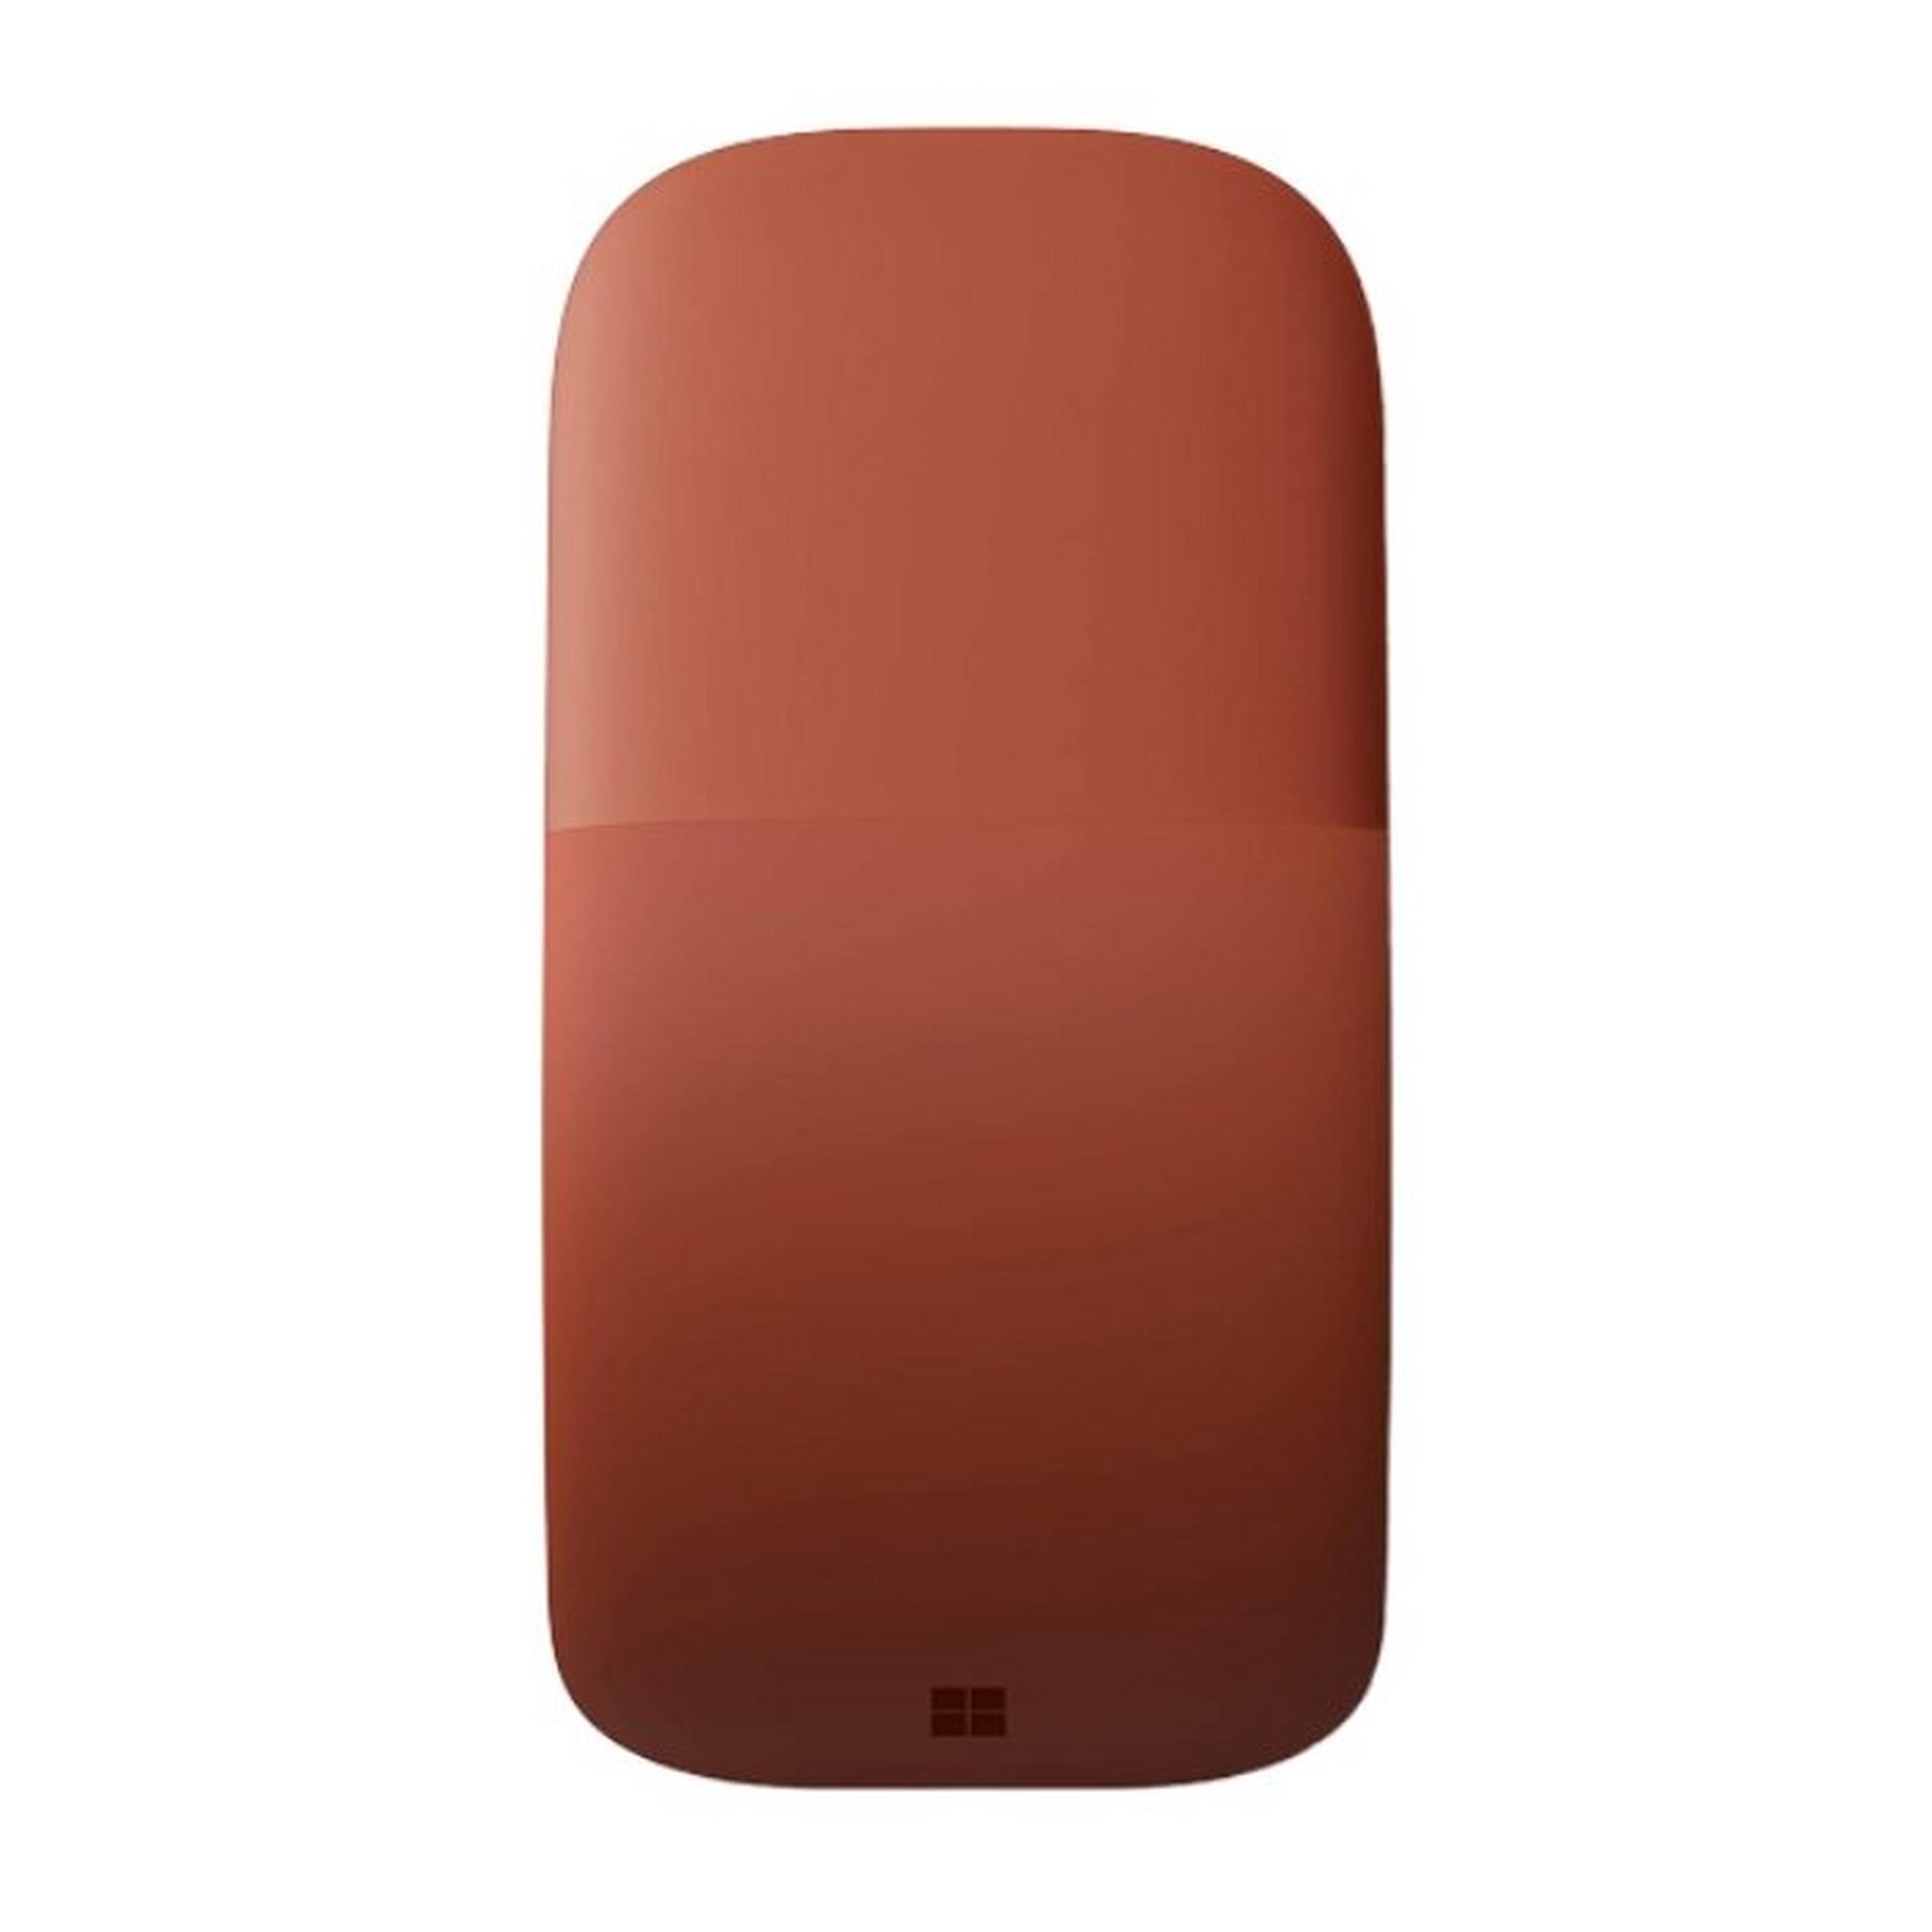 Microsoft Arc Wireless Mouse - Popy Red